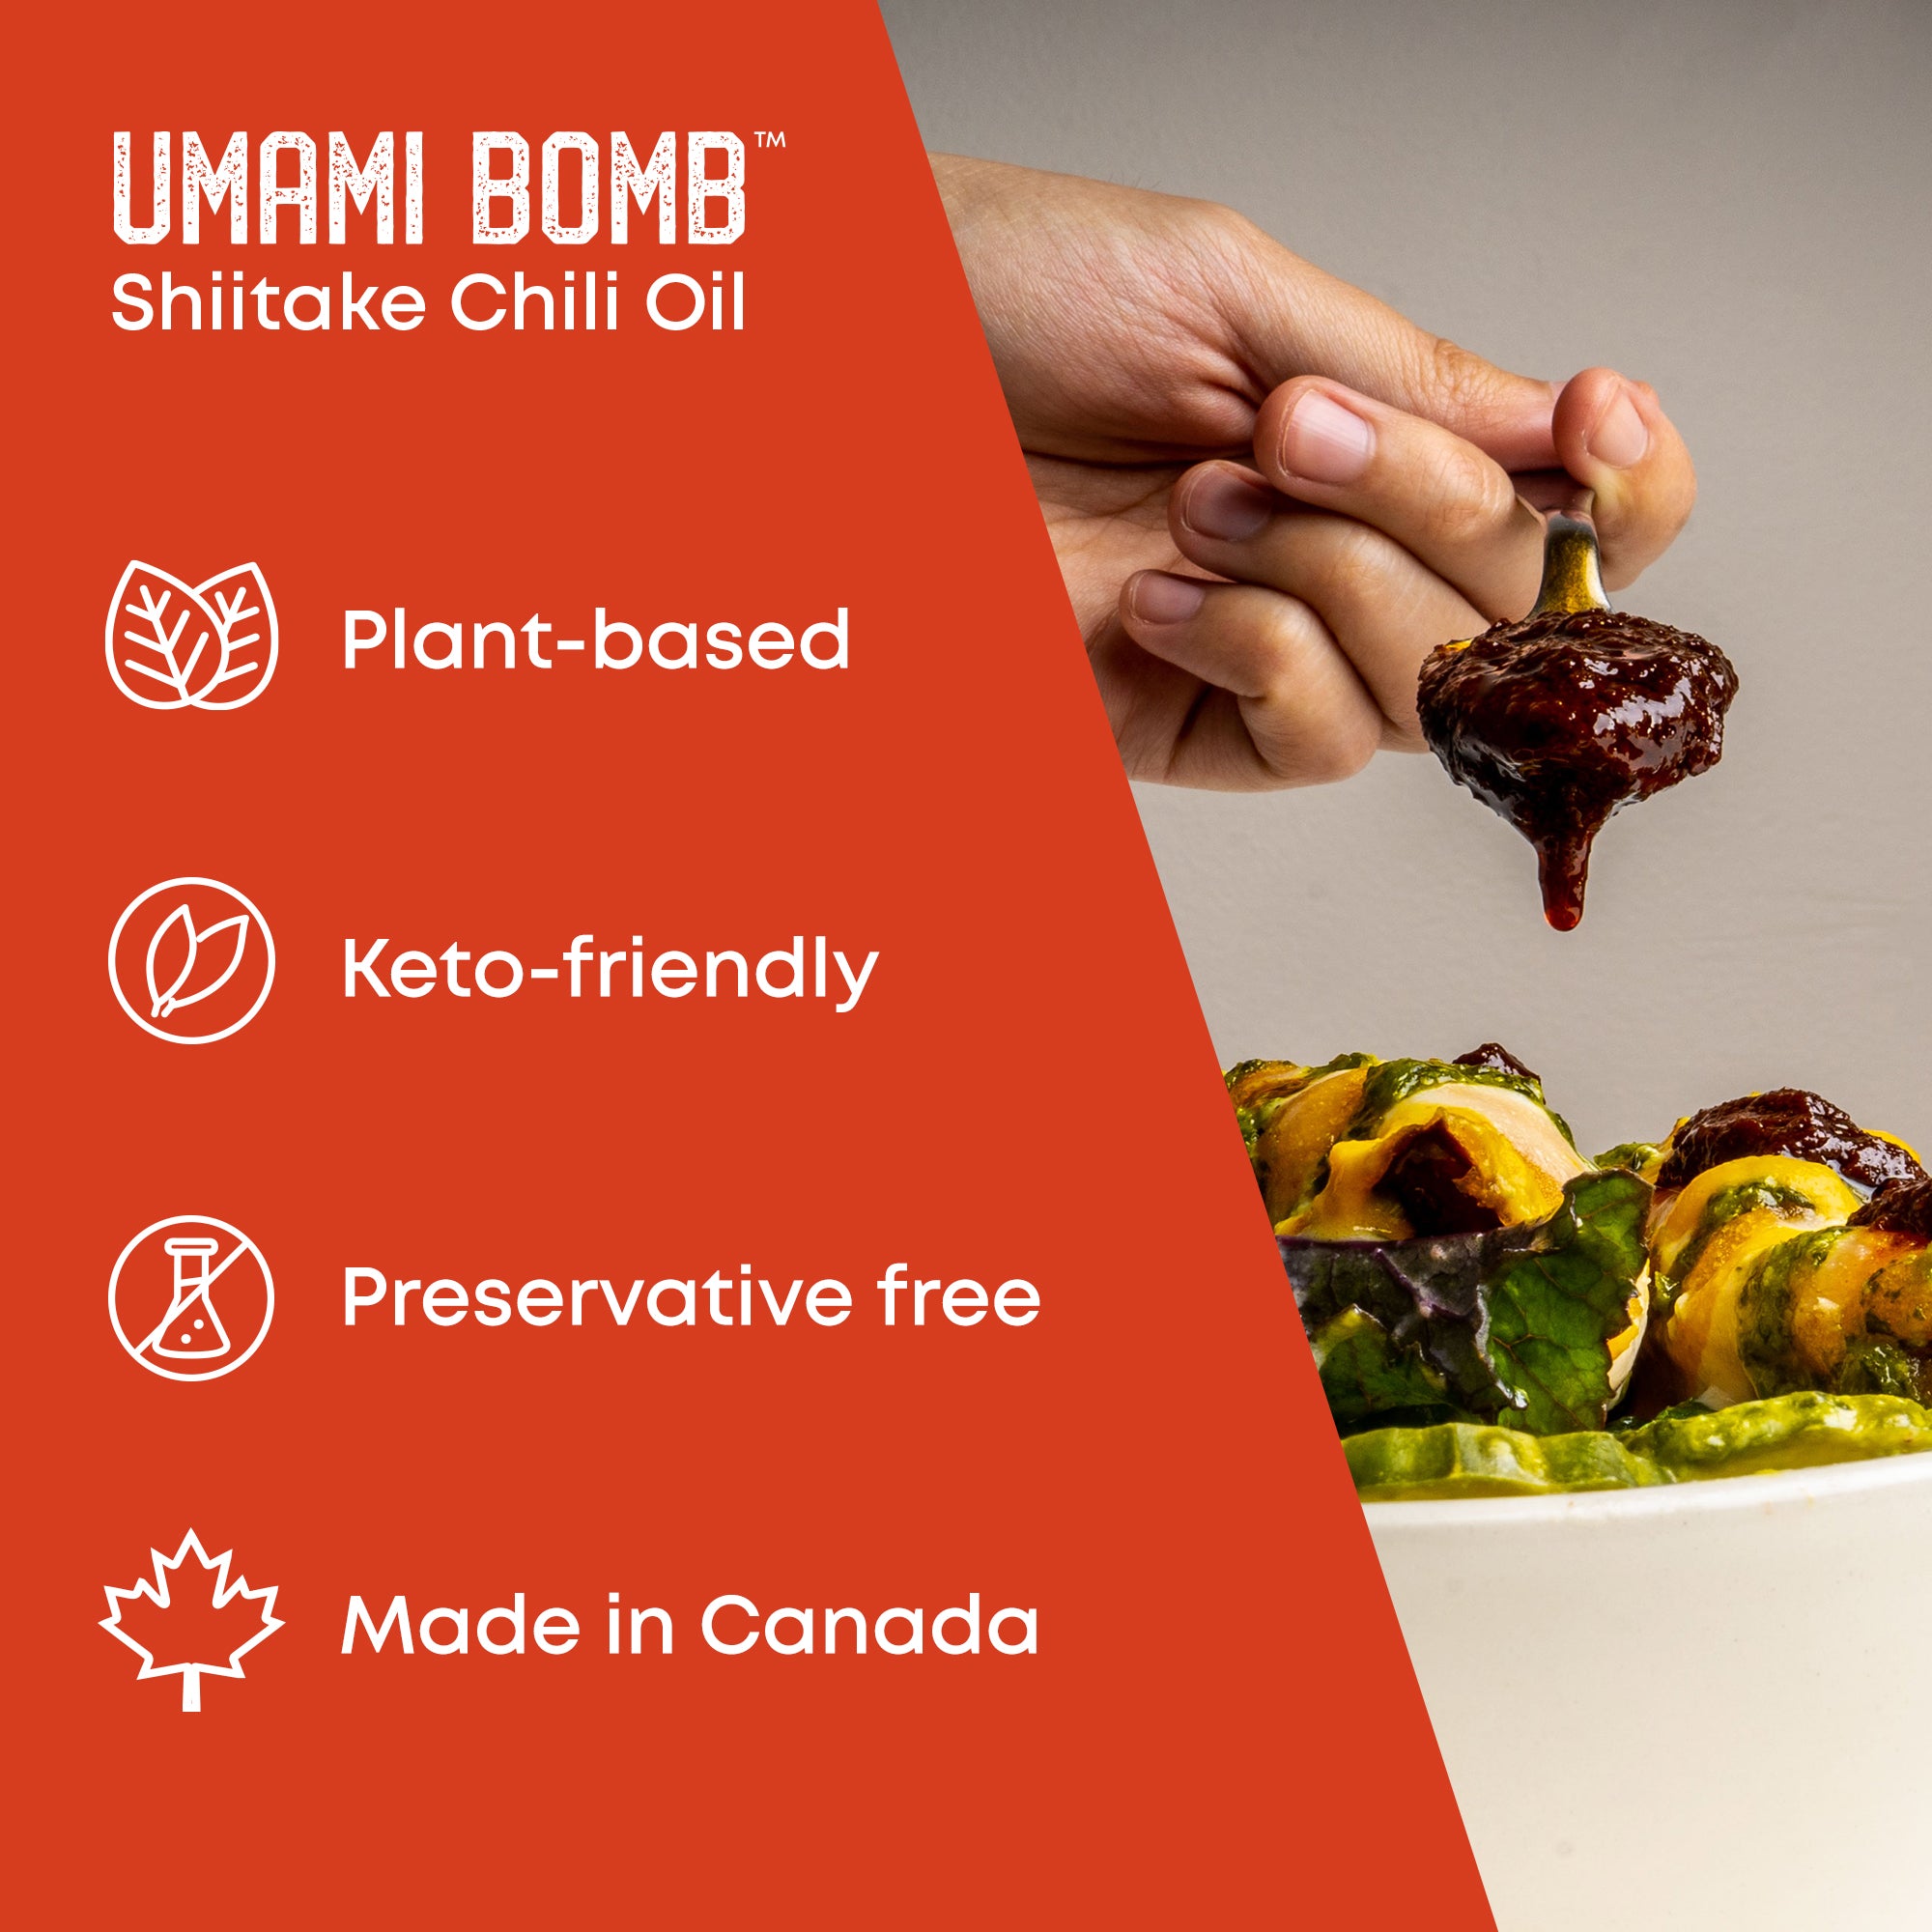 Umami Bomb Shiitake Chili Oil - Hot